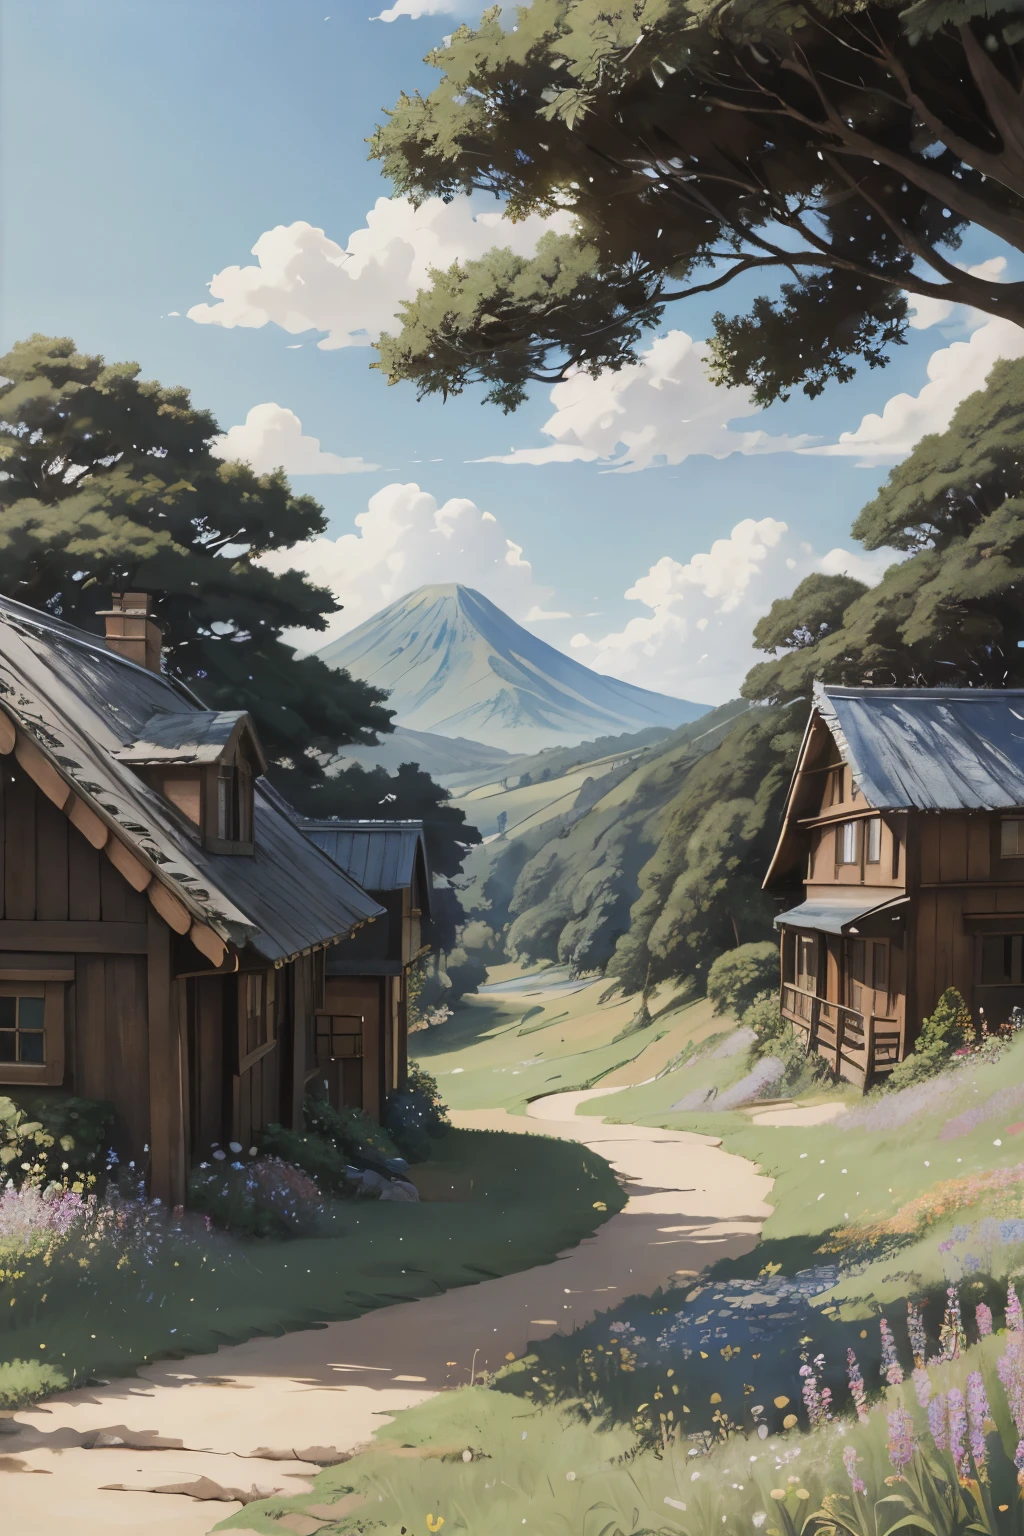 realista, Real, bela e deslumbrante paisagem pintura a óleo Studio Ghibli Hayao Miyazaki Pétalas Pastagem Céu Azul Pastagem Estrada Rural,prédio, garota linda